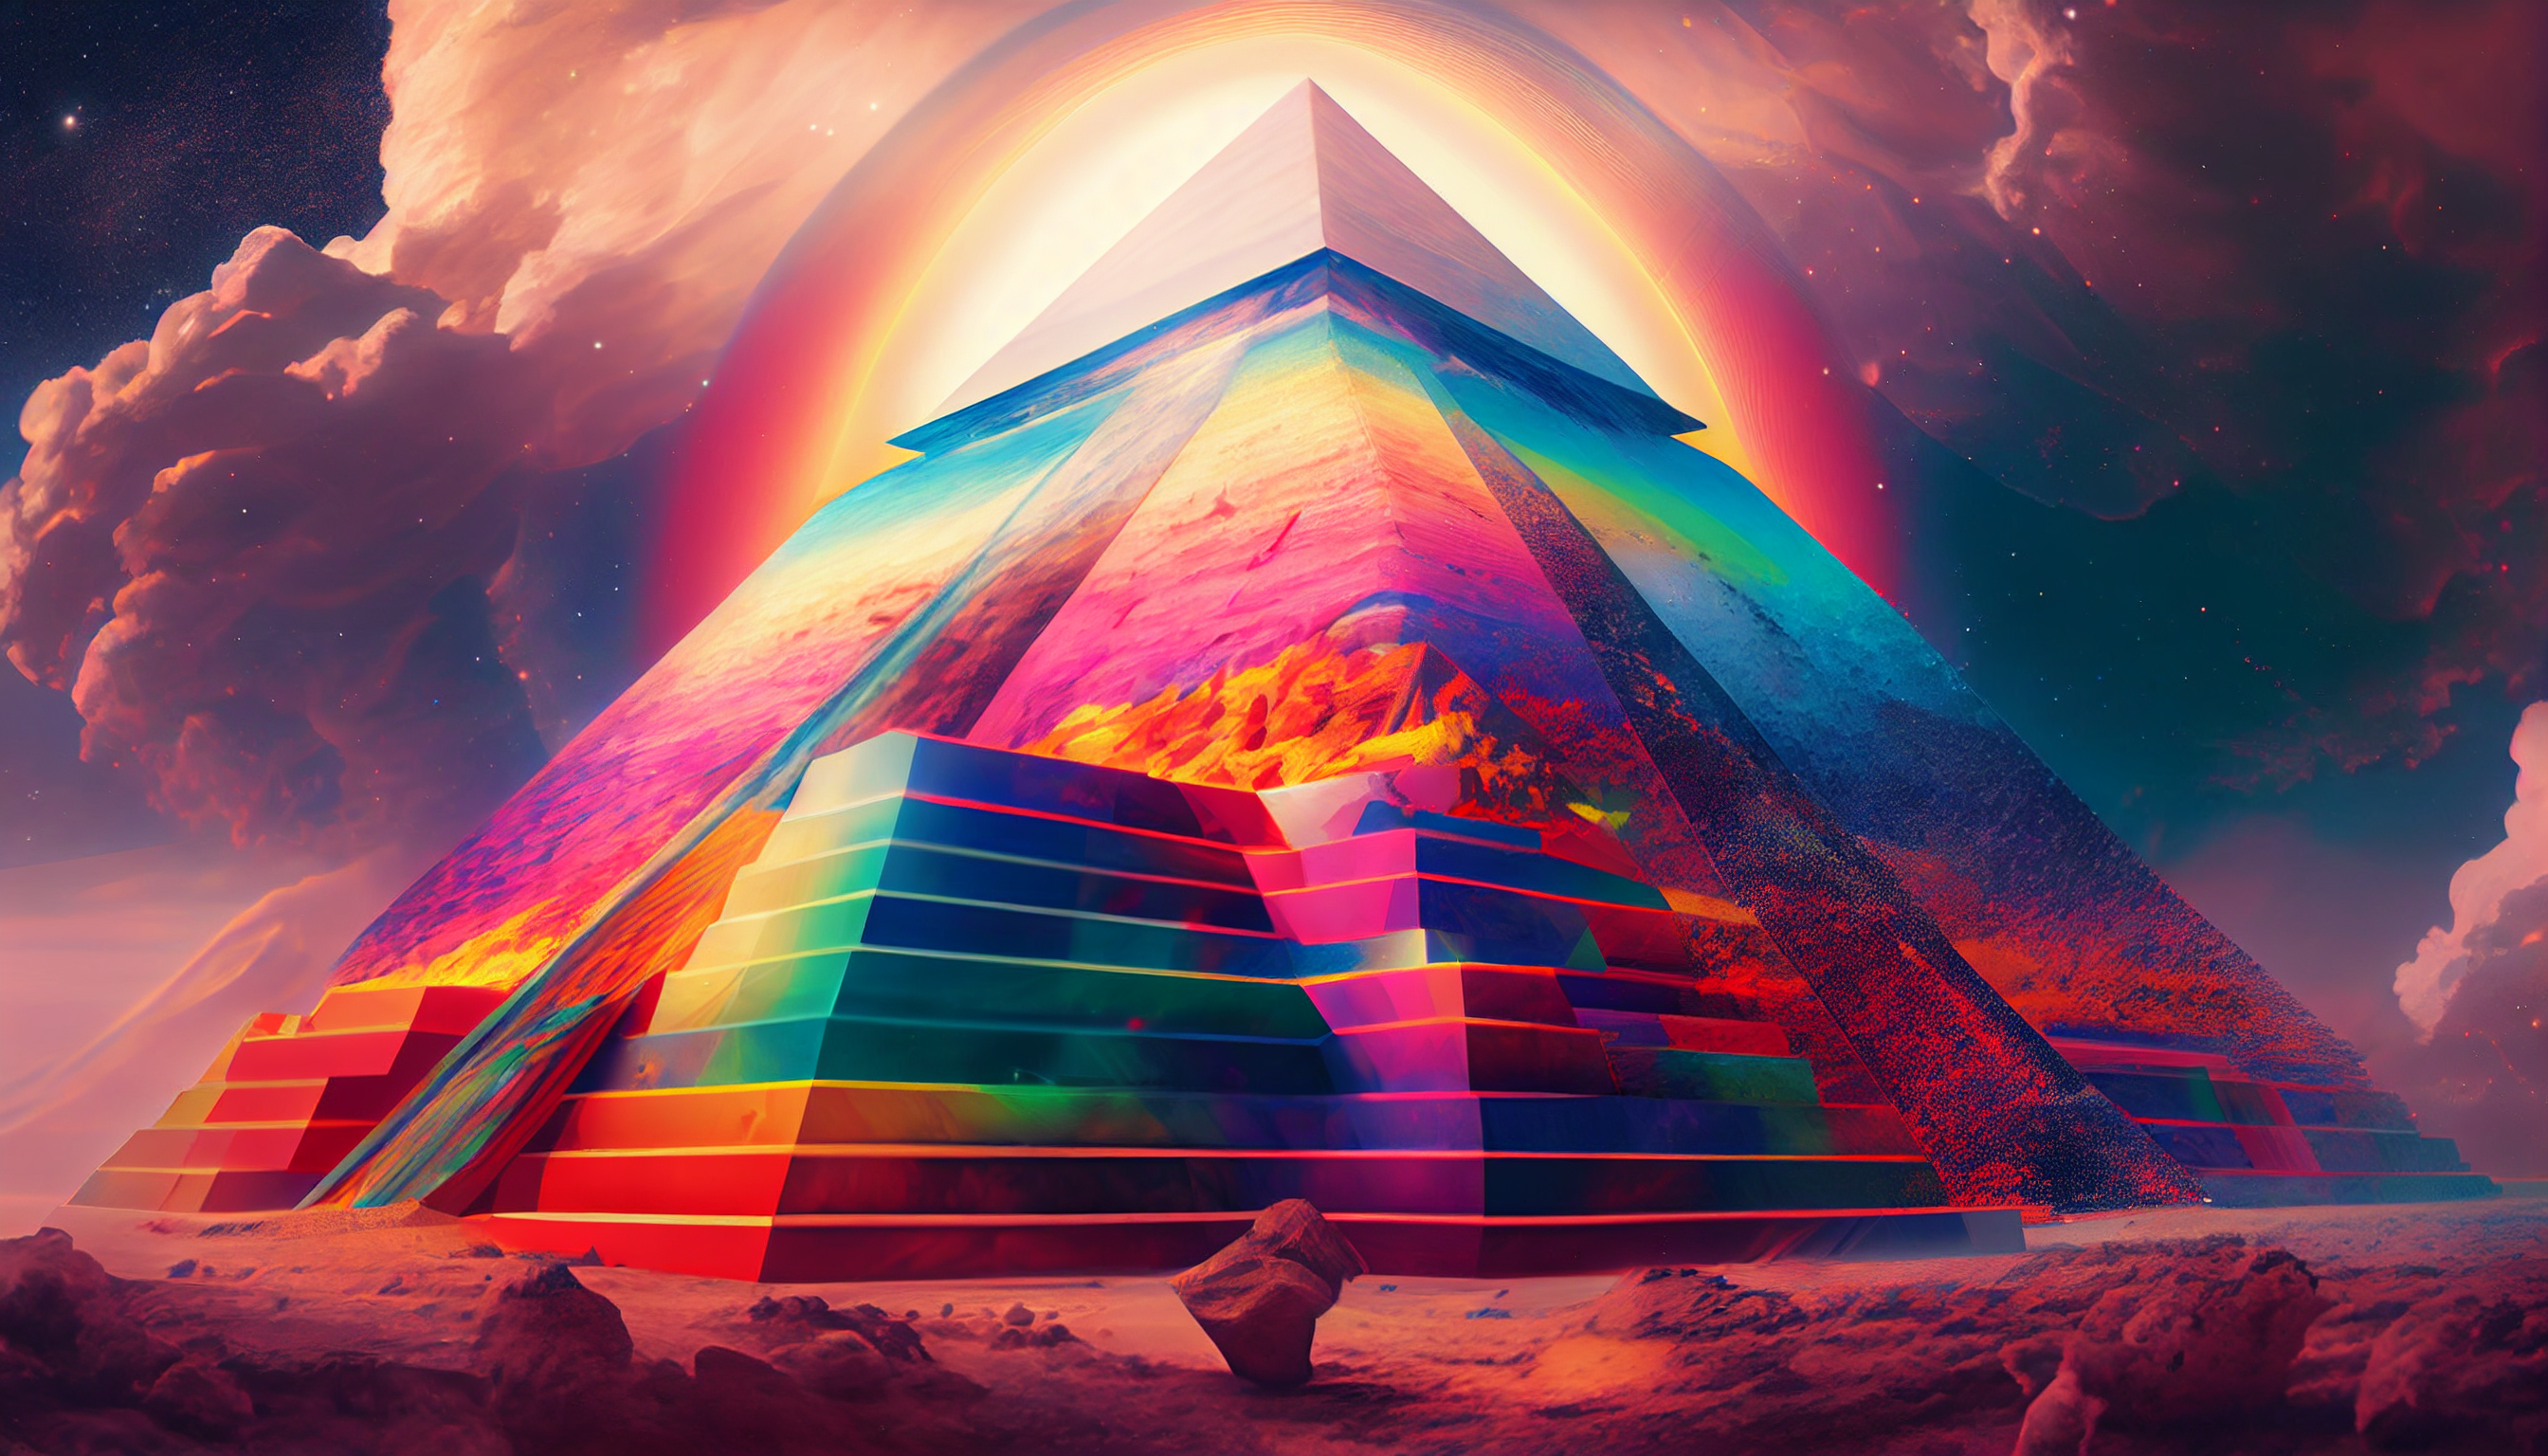 General 2688x1536 pyramid overcast AI art Midjourney landscape architecture trippy spectrum colorful desert stars